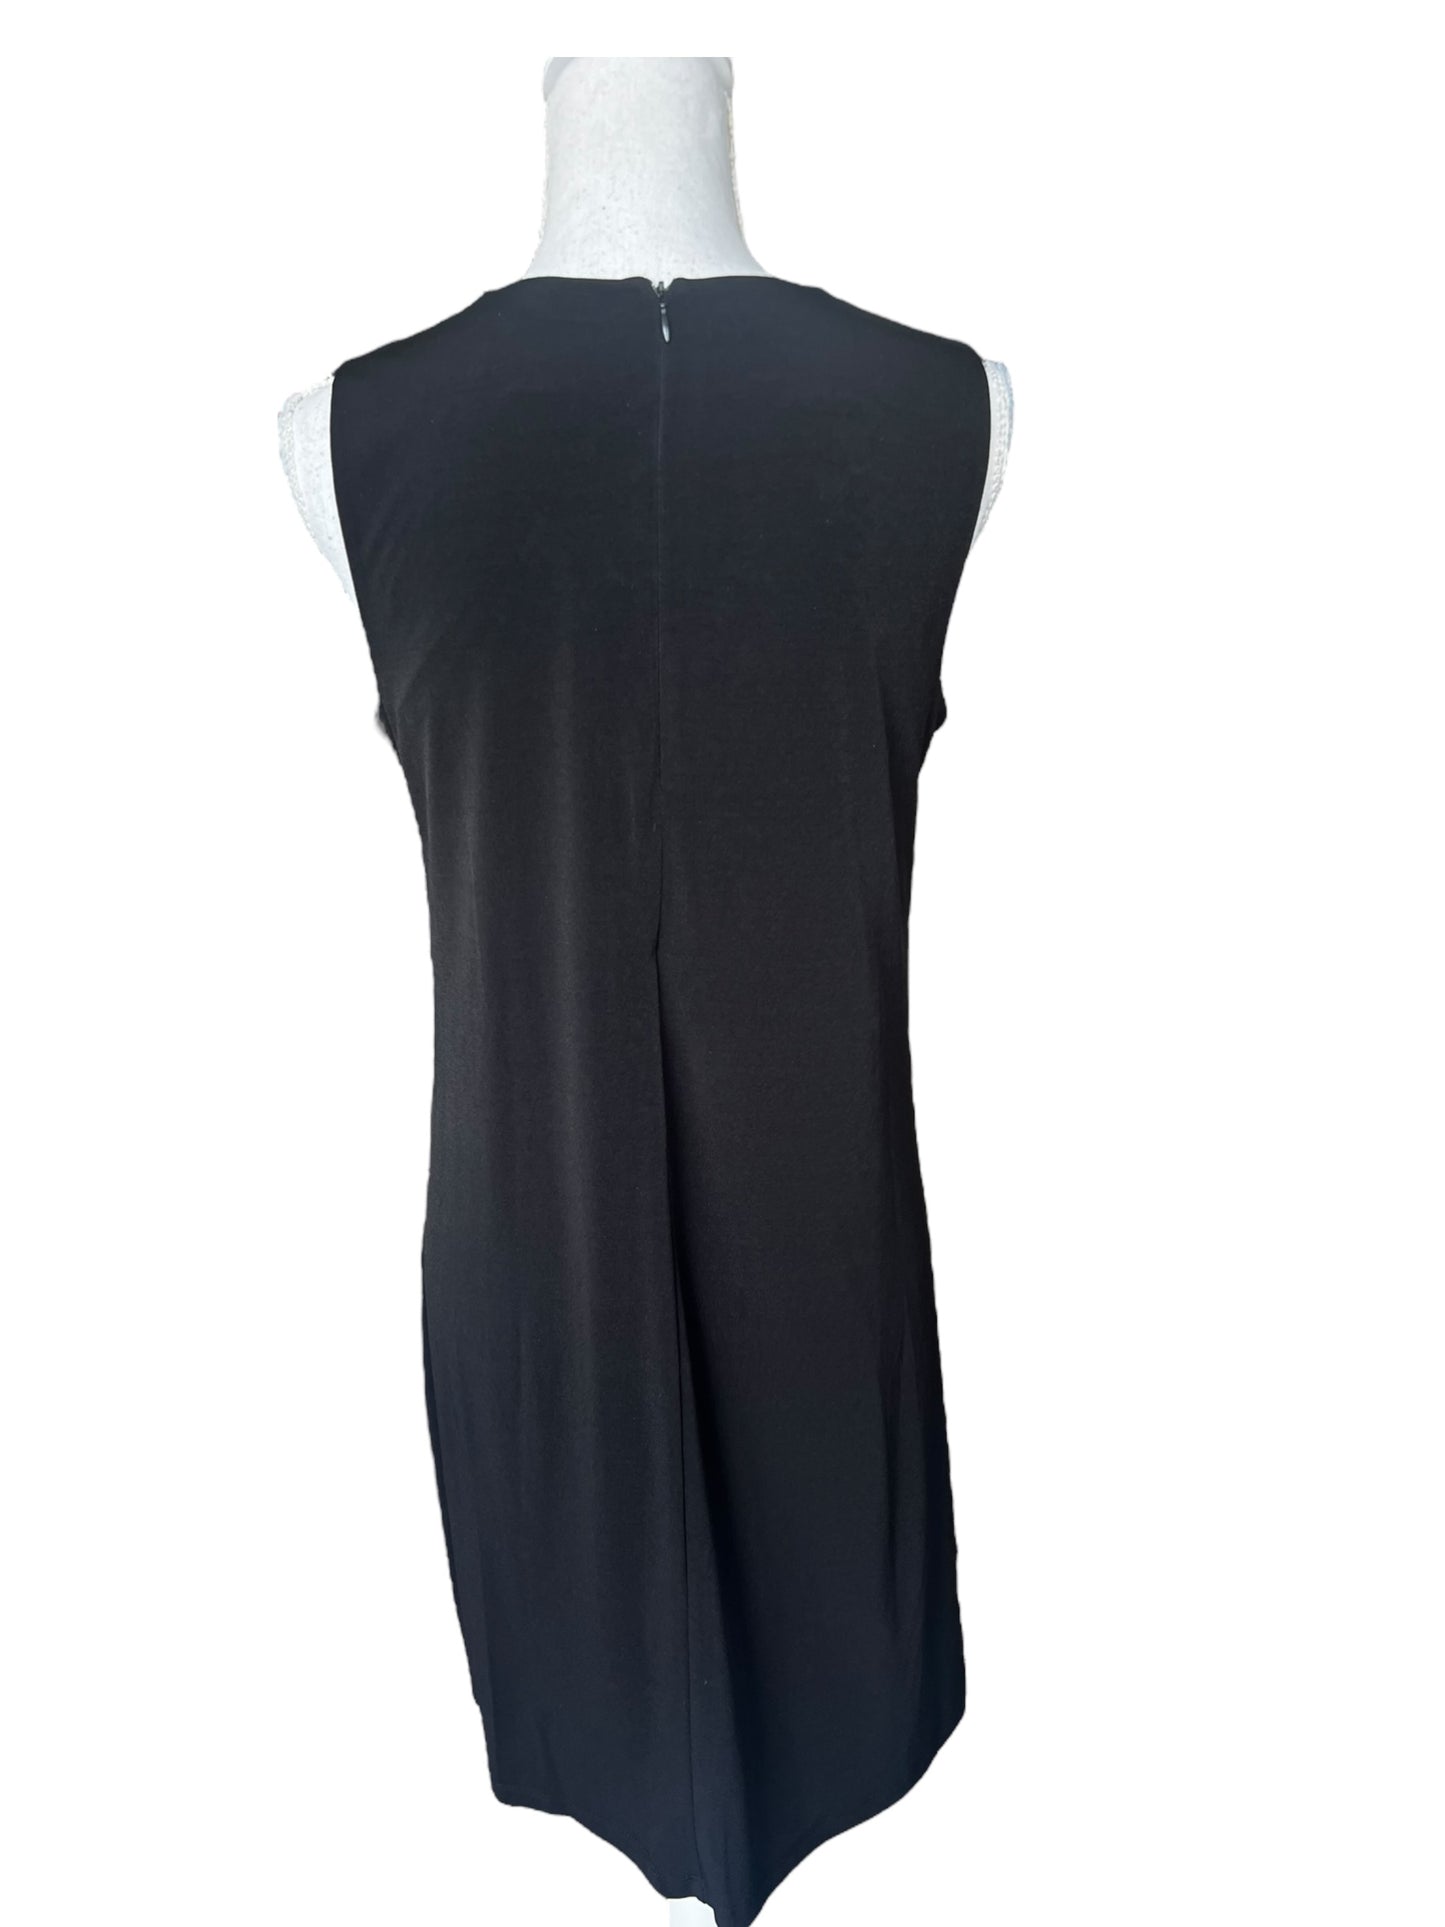 NWT Calvin Klein Women’s dress black with gold chain neck closure size: 4